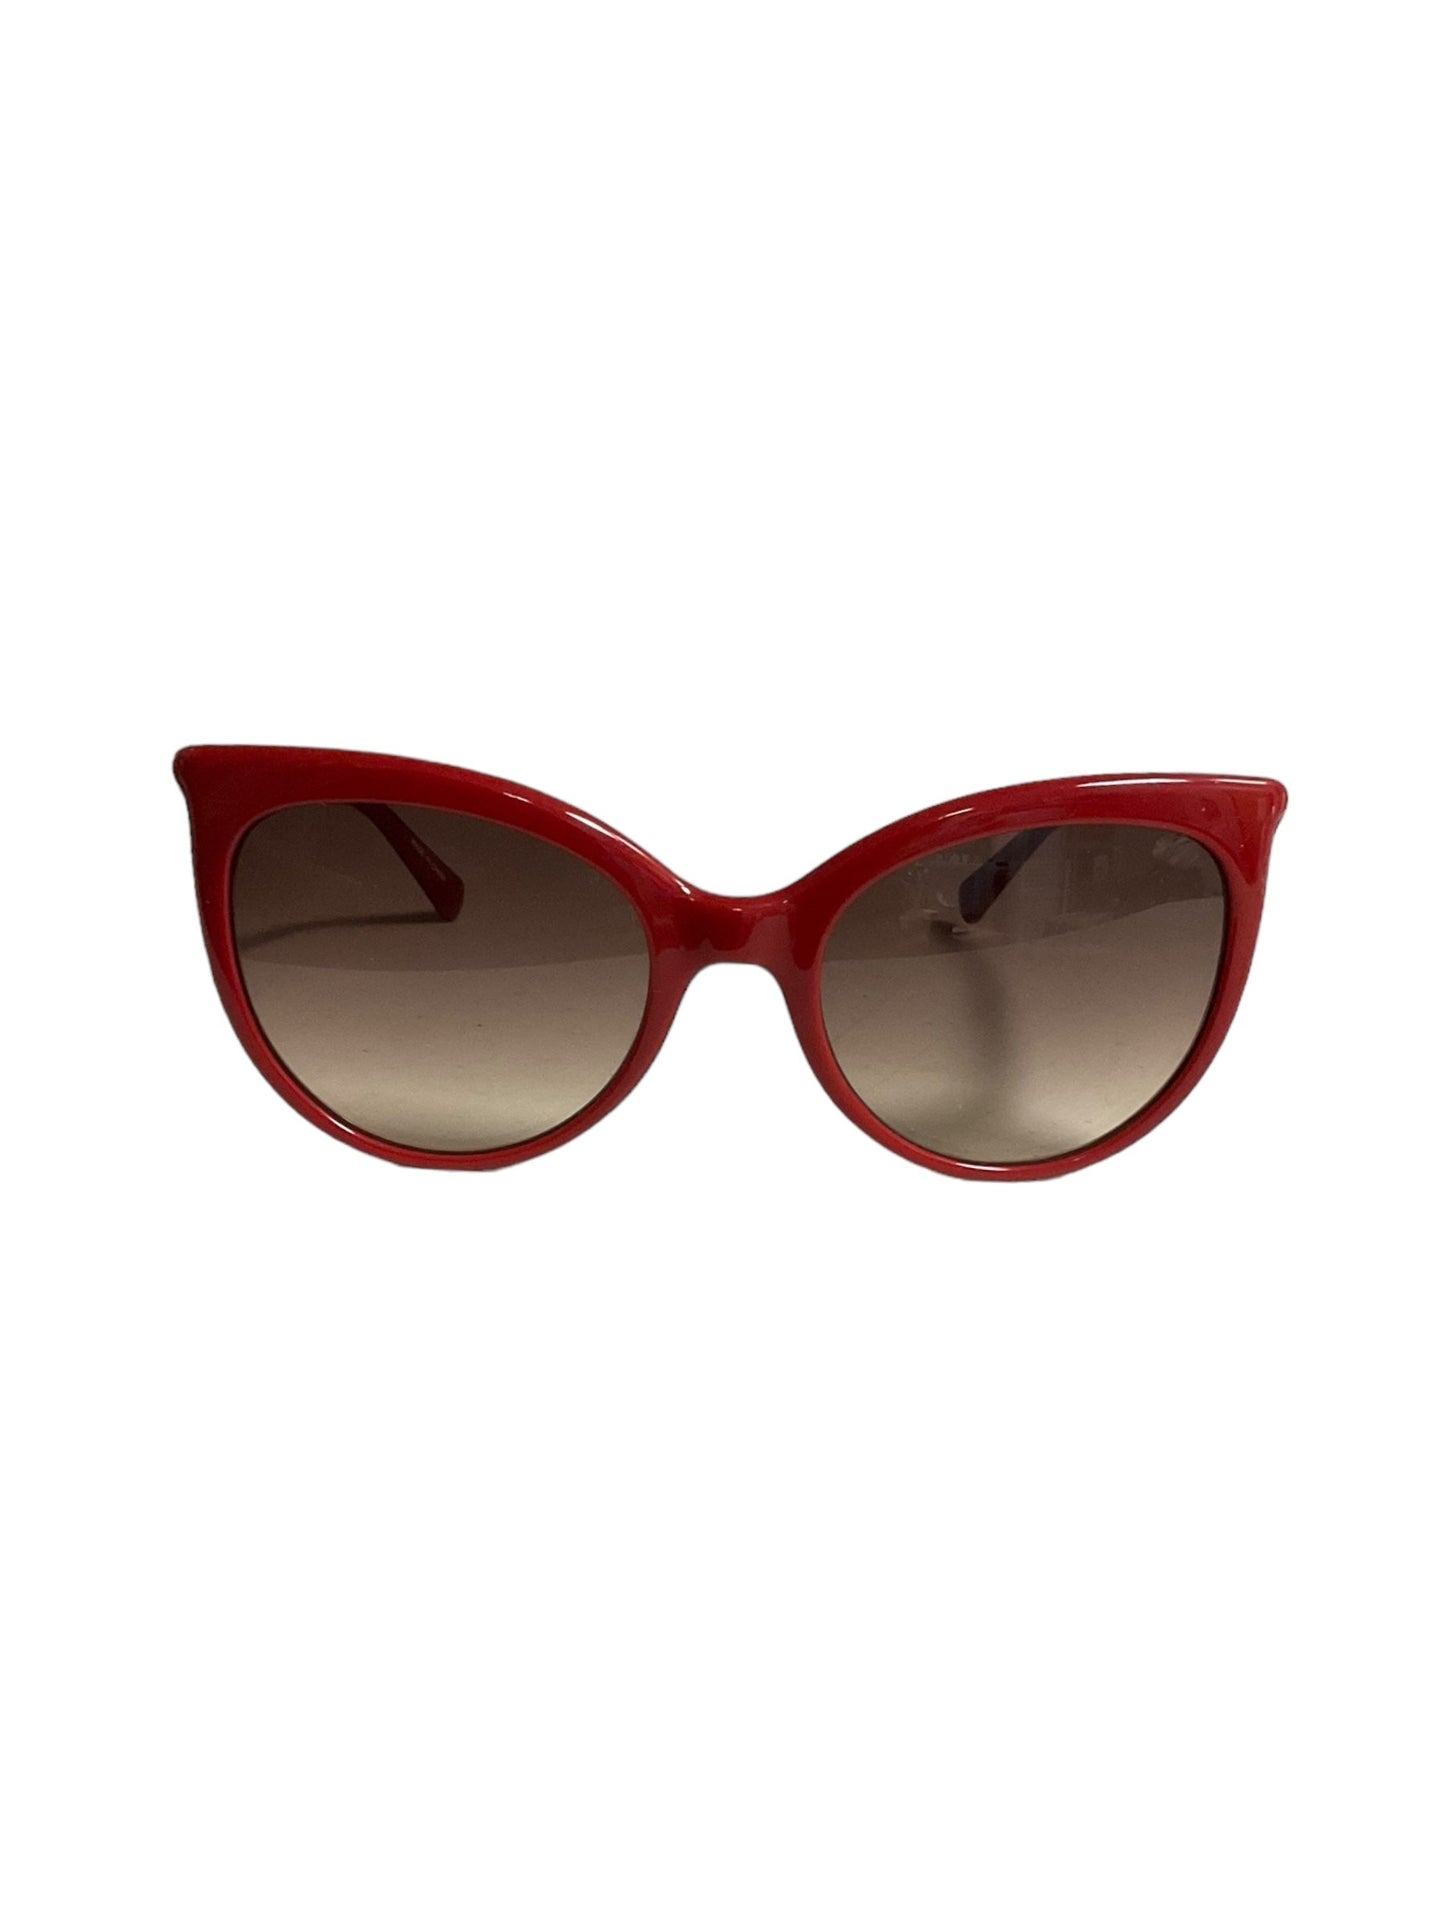 Sunglasses Designer Longchamp